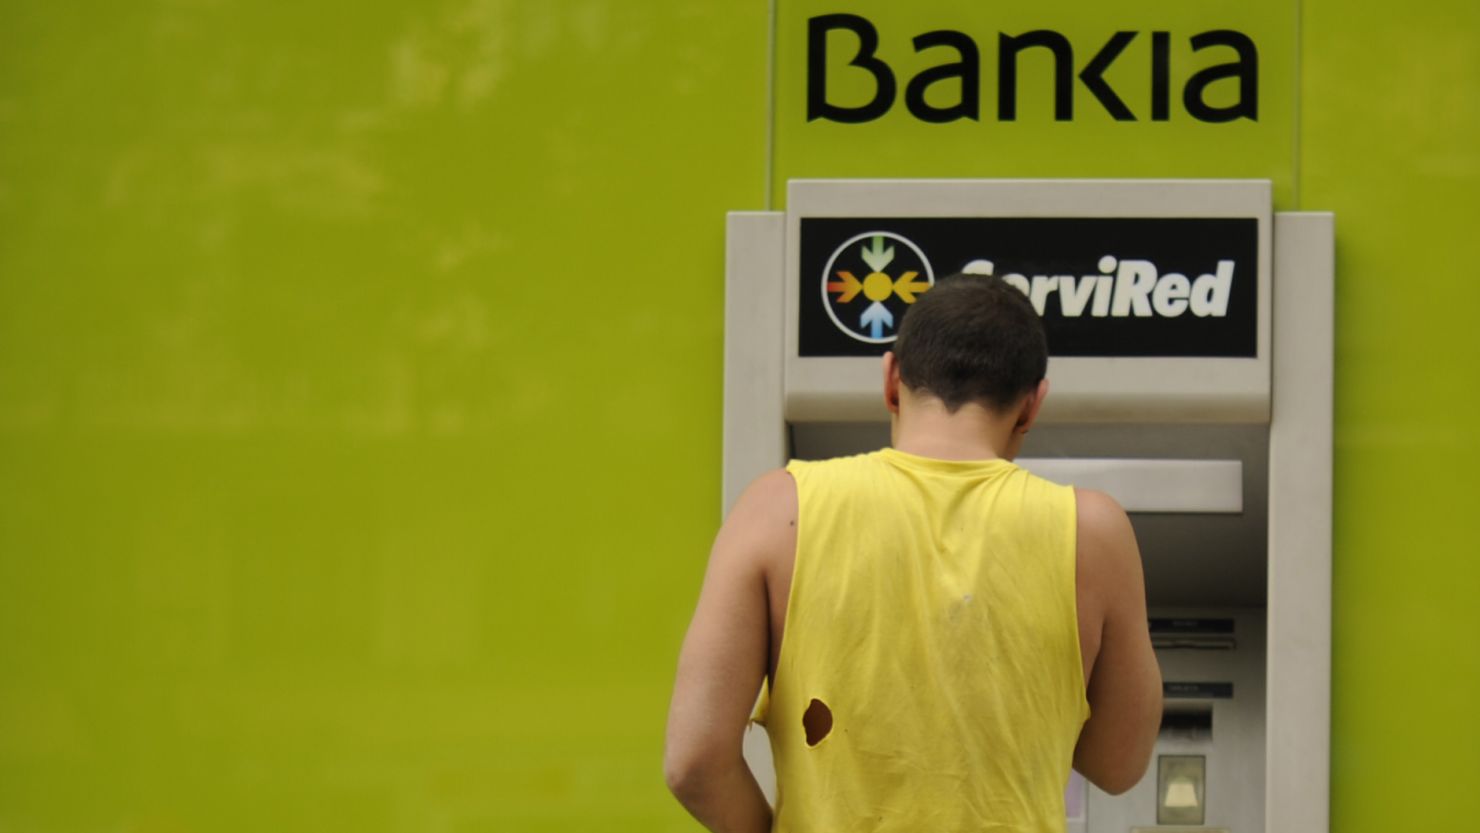 Spain's deputy economy minister denied rumors of a run on the Spanish bank Bankia.